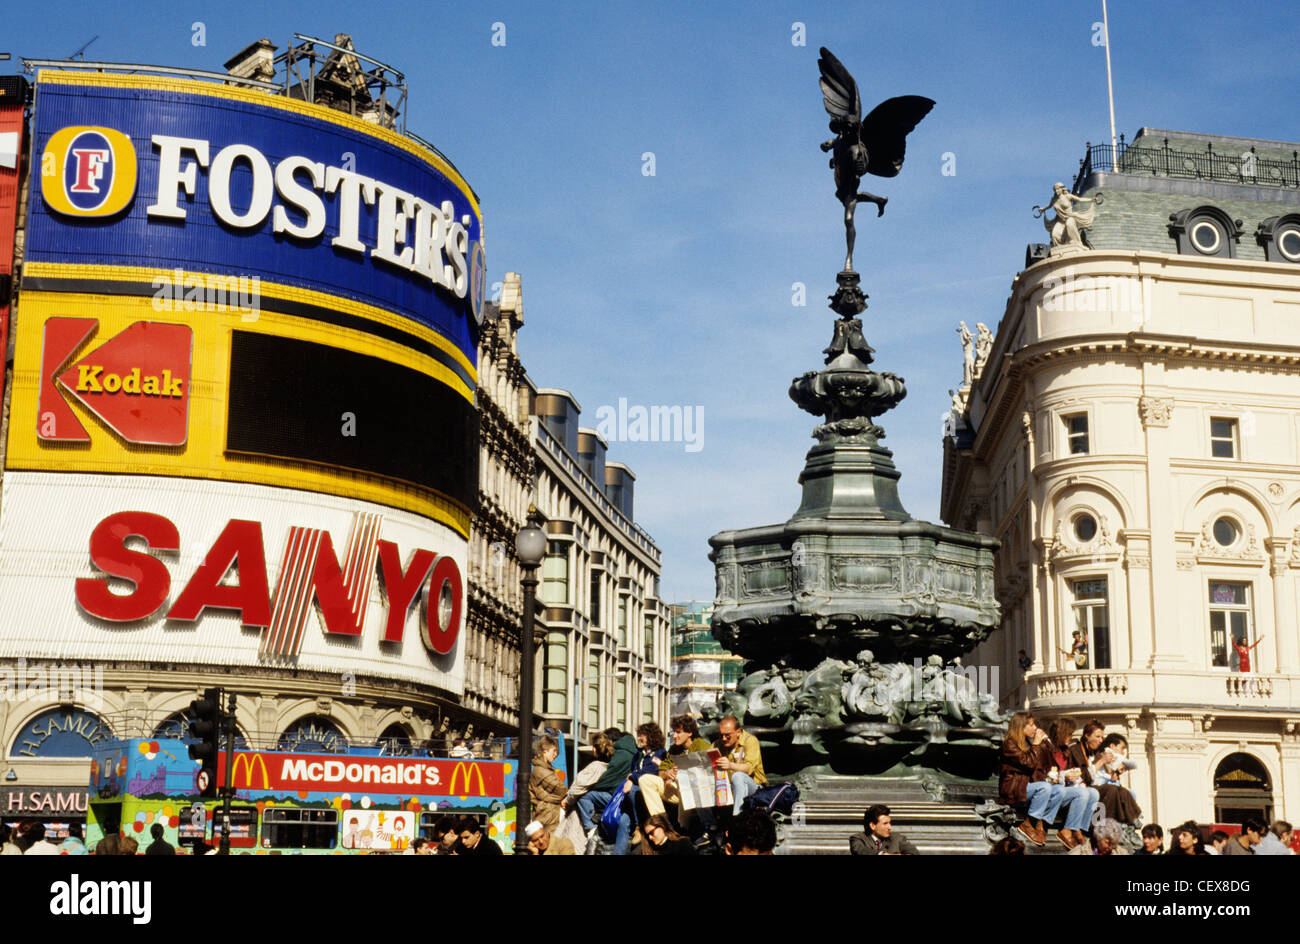 Piccadilly Circus, Eros statue, London England UK English tourism tourists visitors Stock Photo